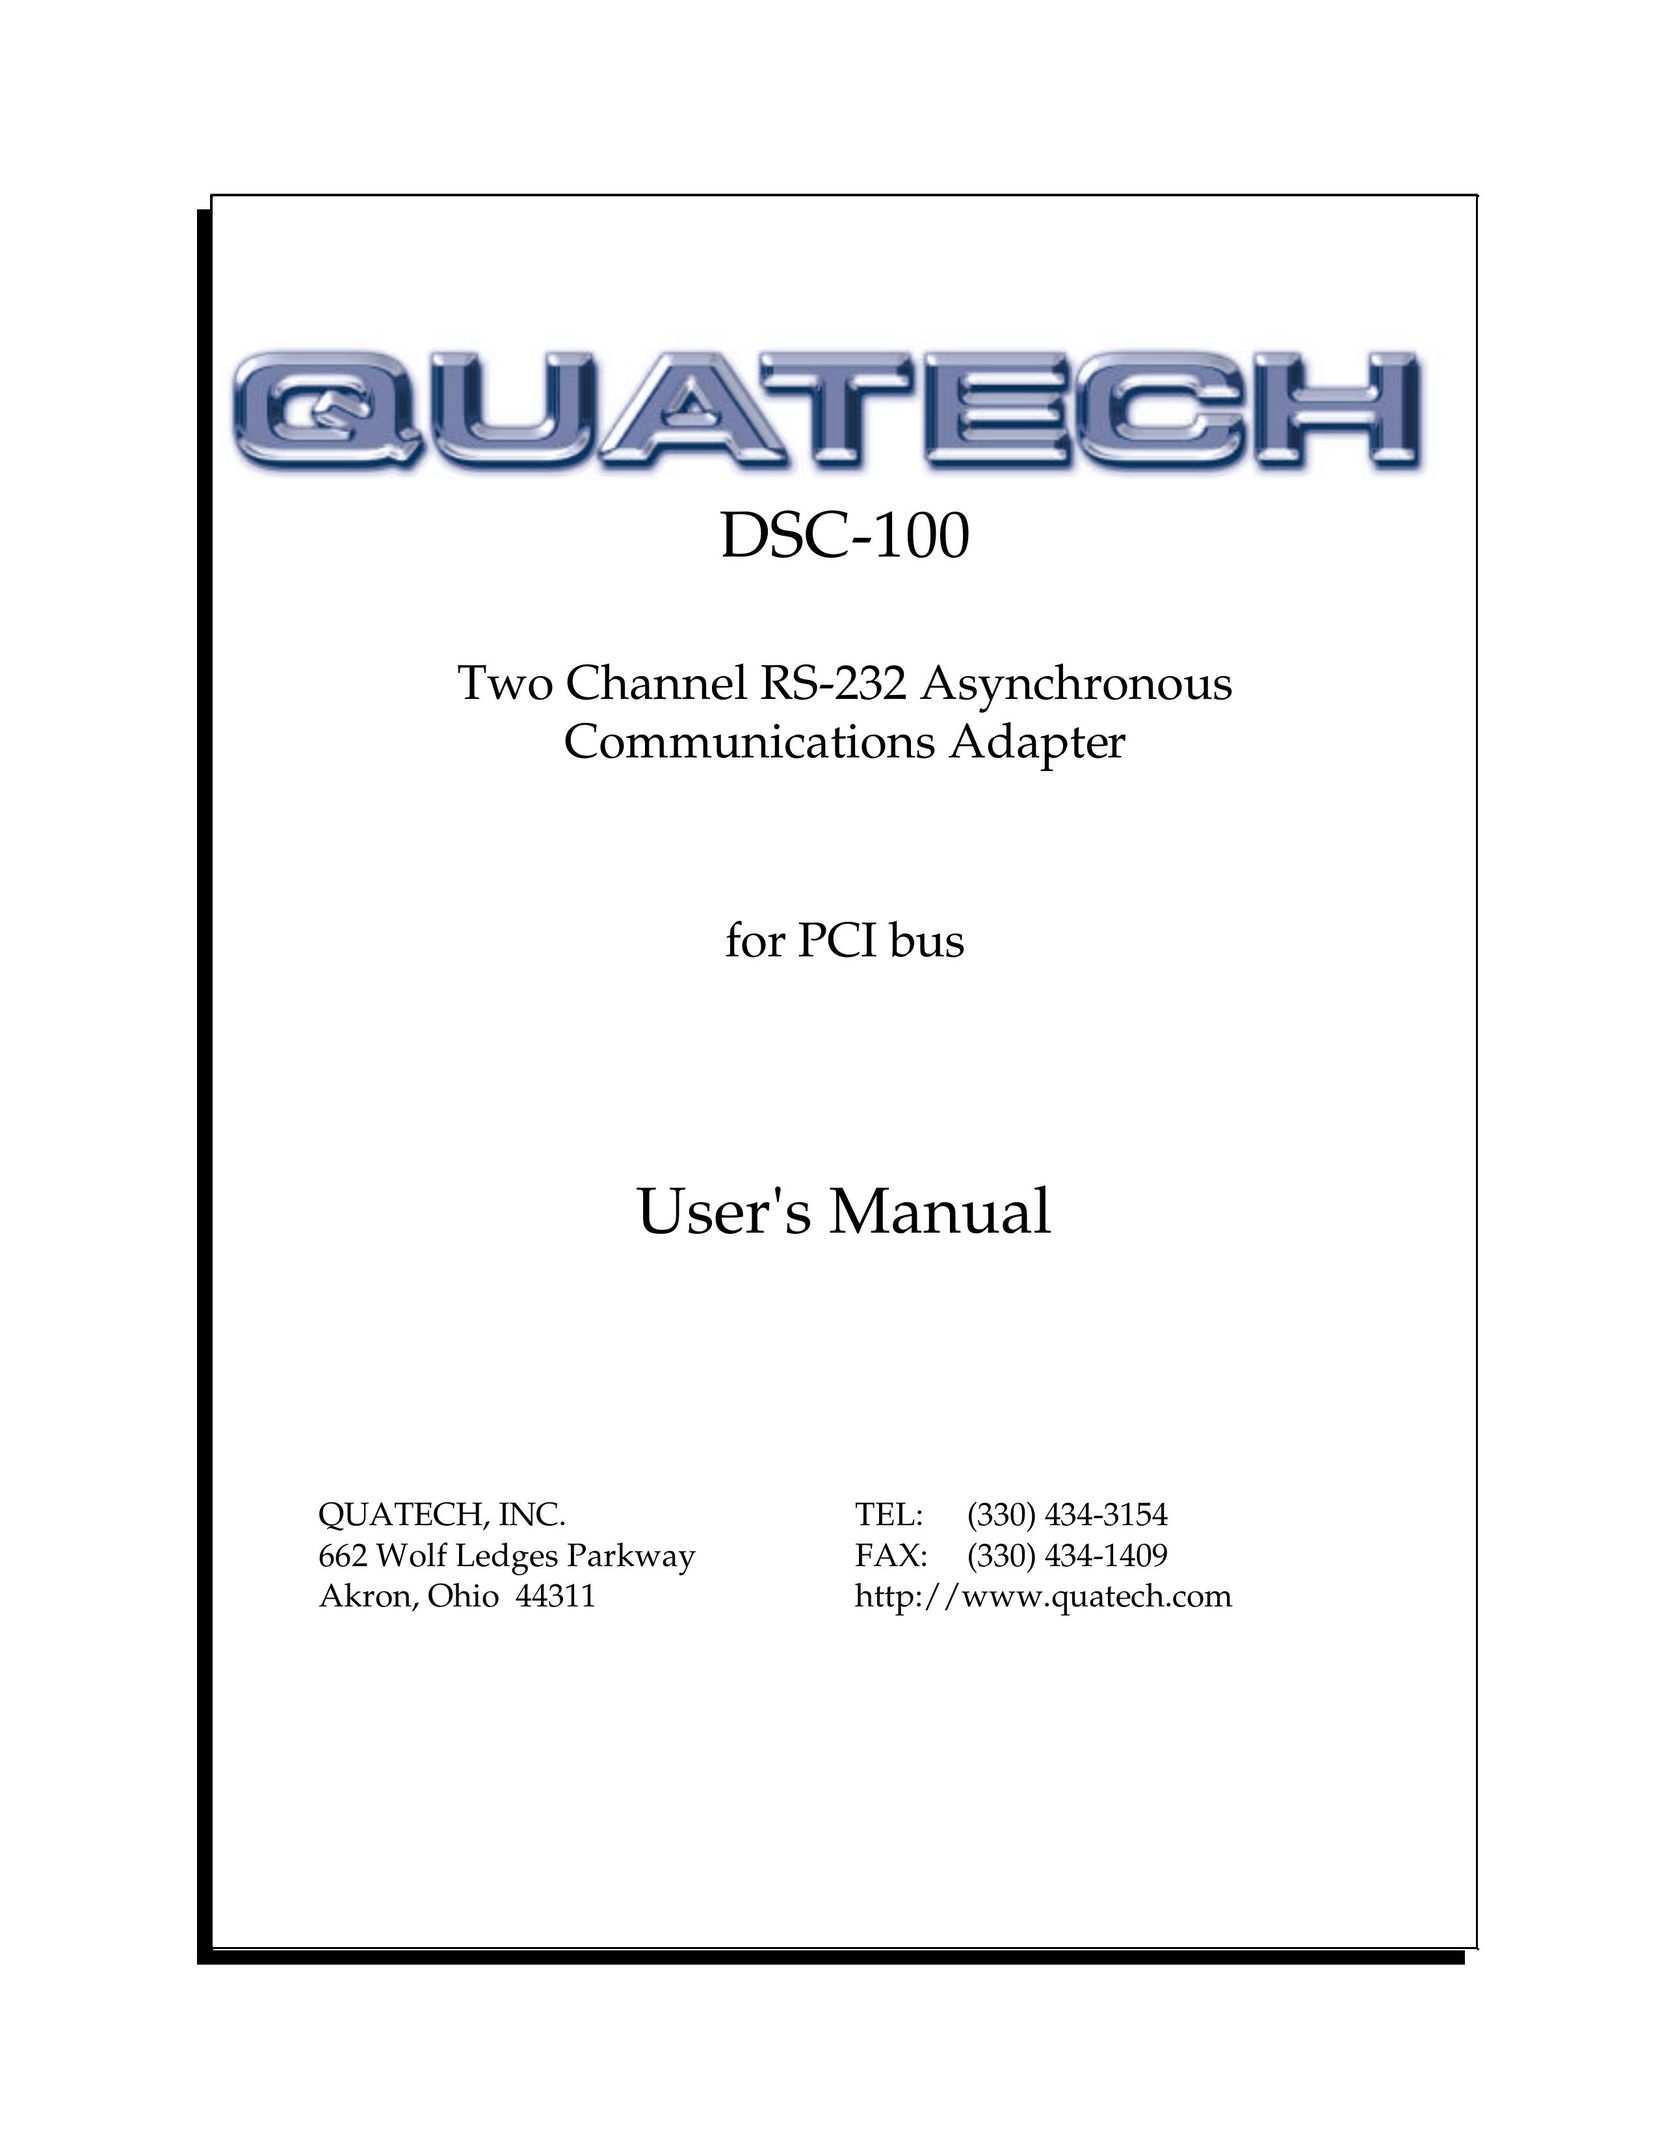 Quatech DSC-100 Network Card User Manual